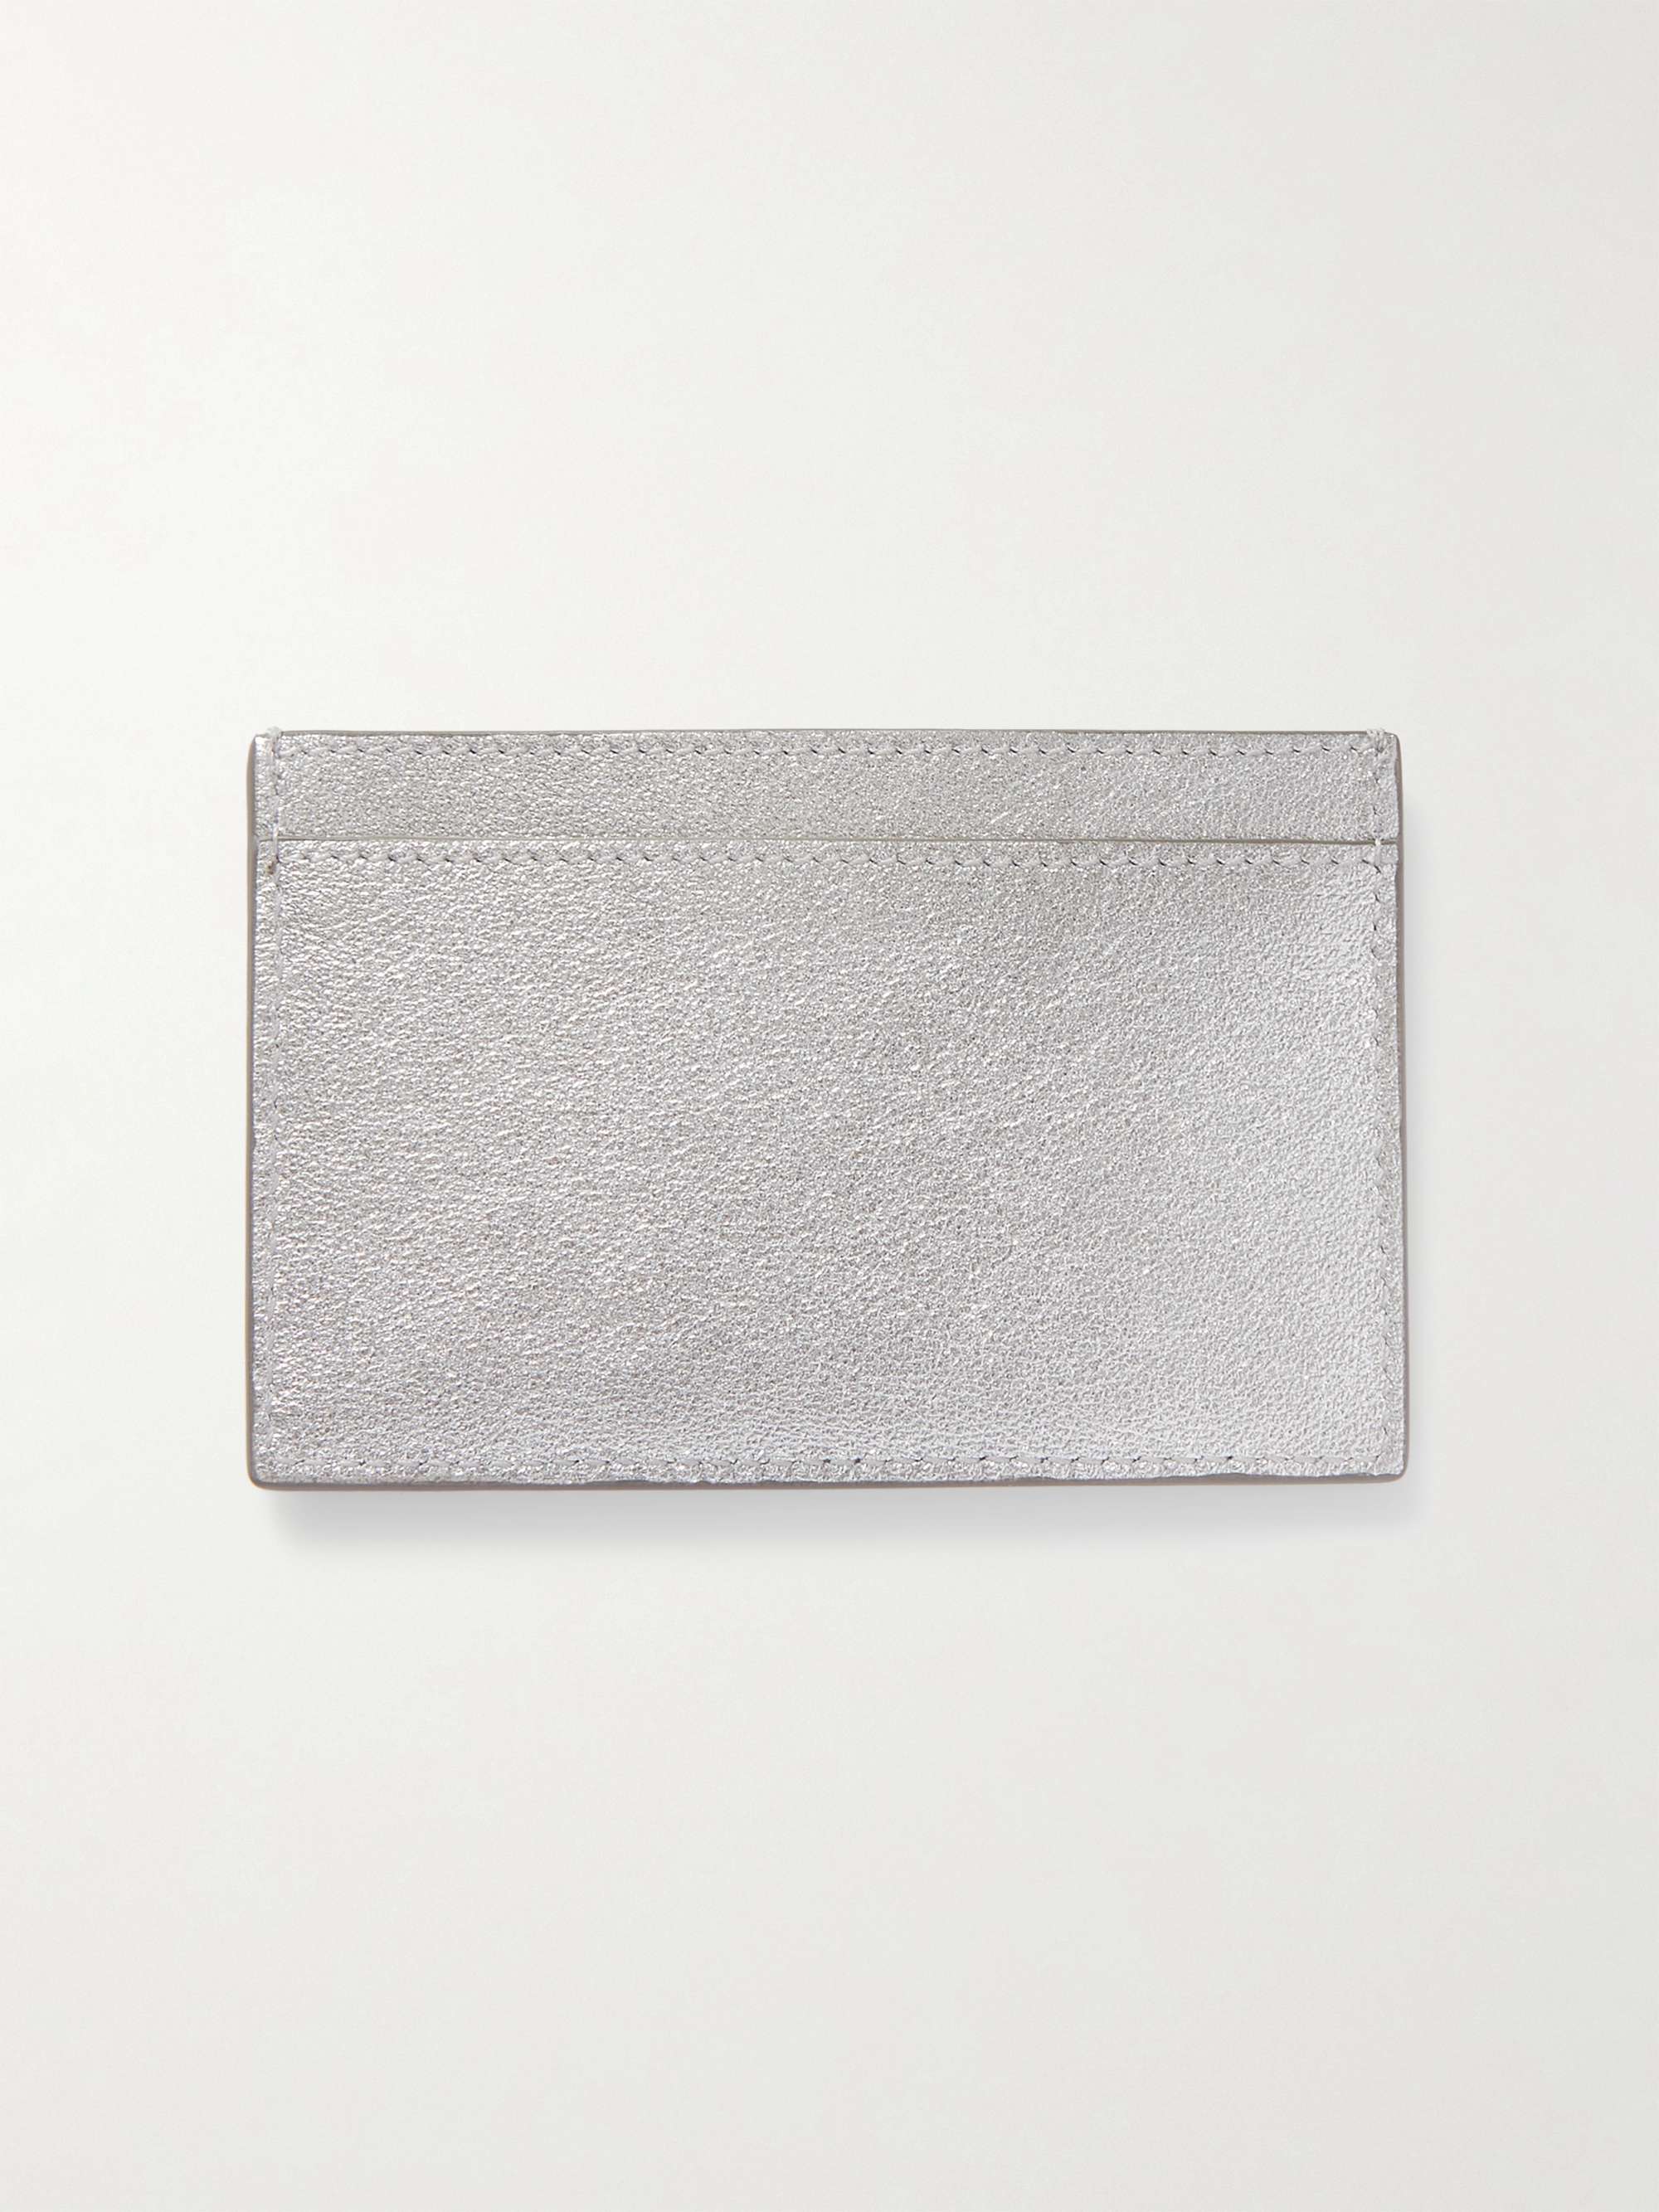 CELINE HOMME Logo-Print Metallic Leather Cardholder